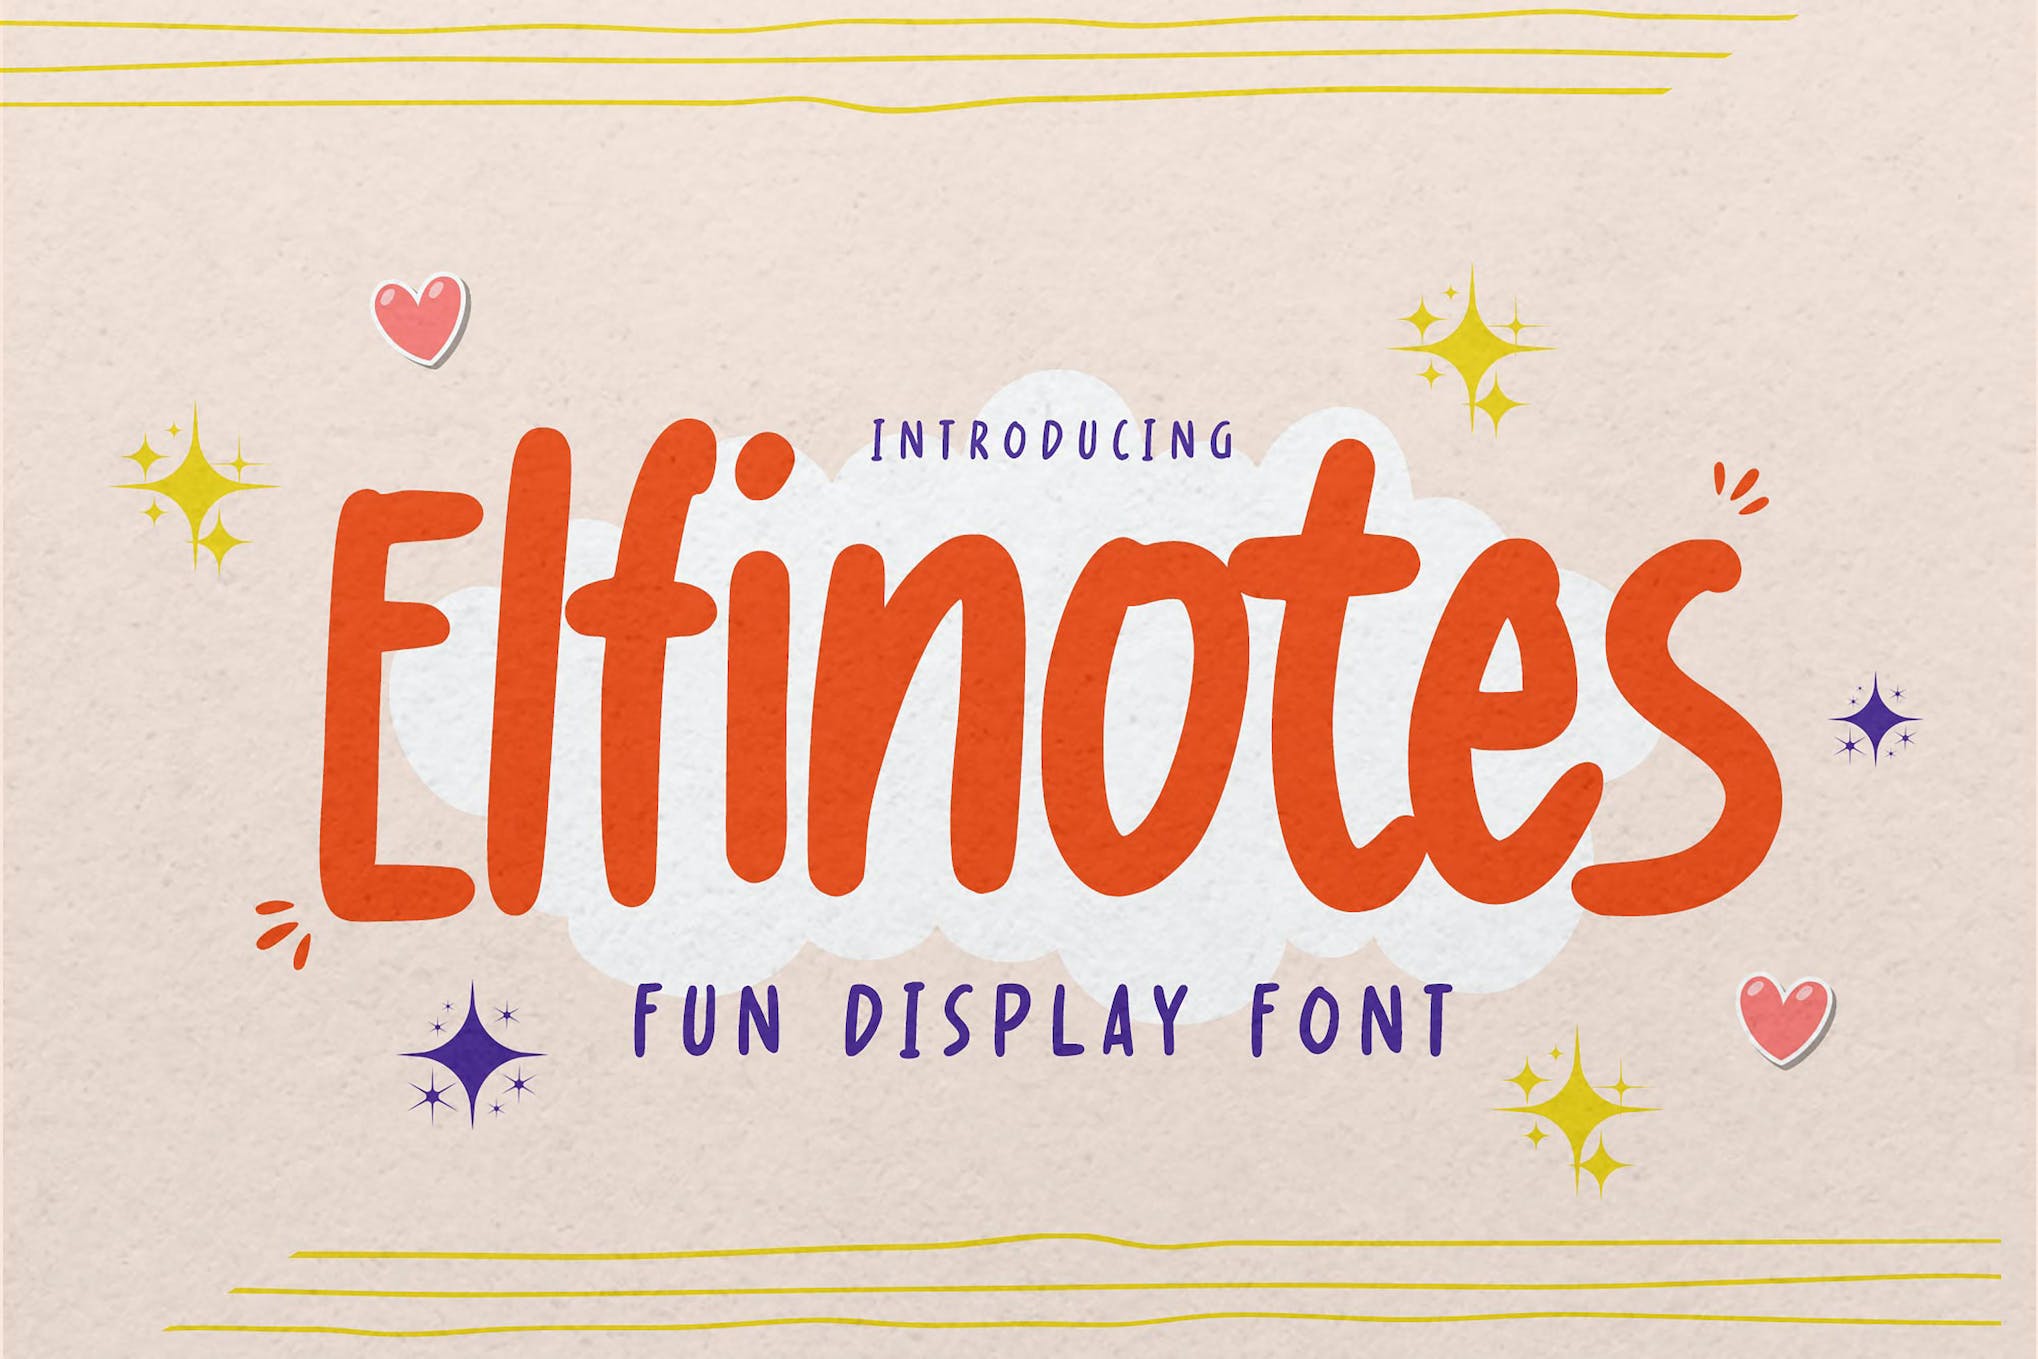 Elfinotes Fun Display Font